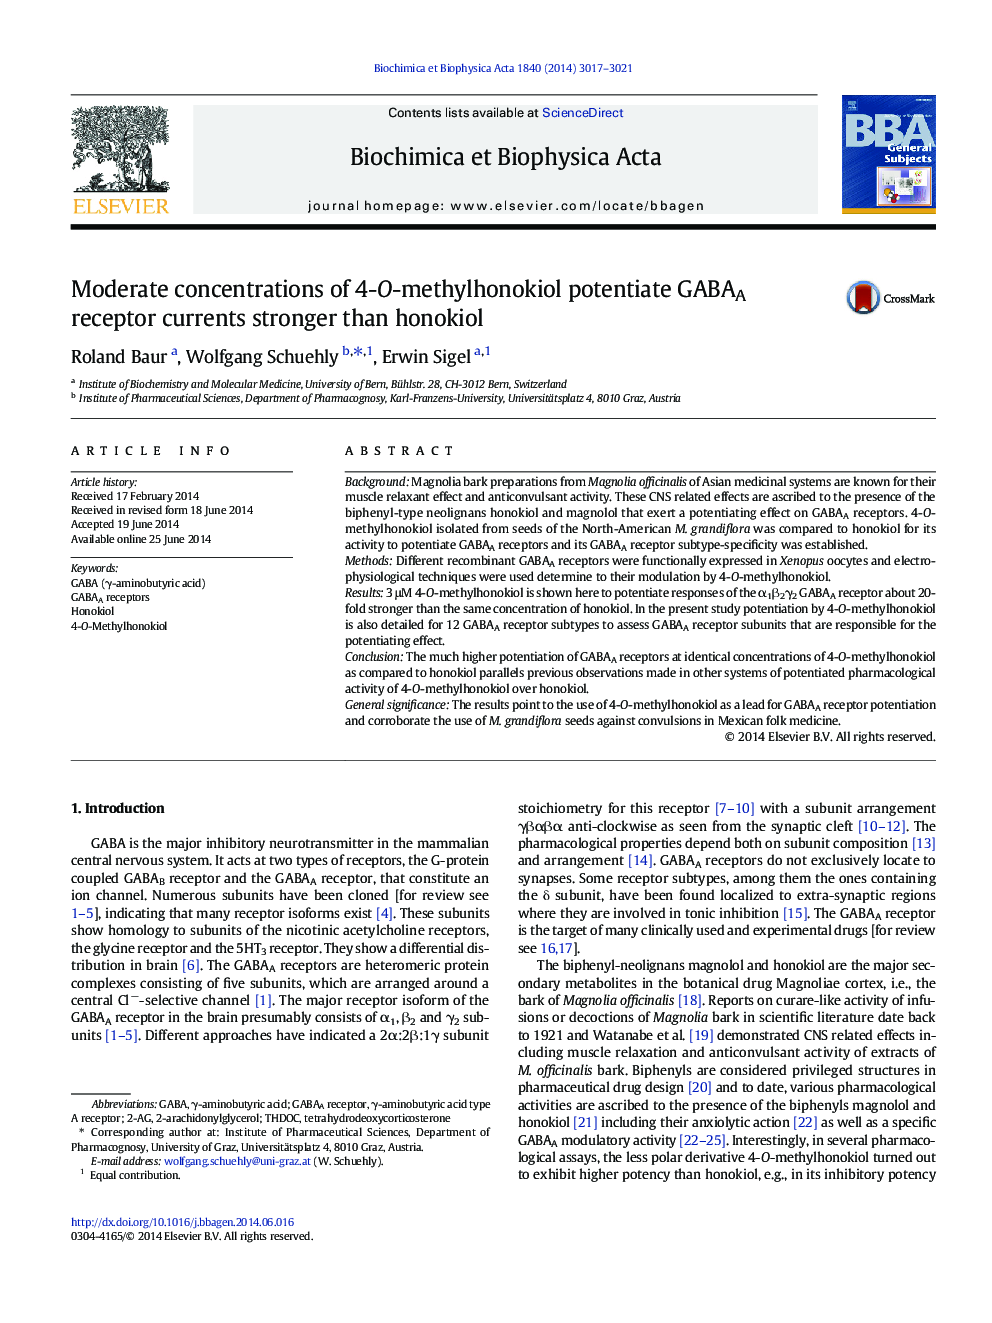 Moderate concentrations of 4-O-methylhonokiol potentiate GABAA receptor currents stronger than honokiol